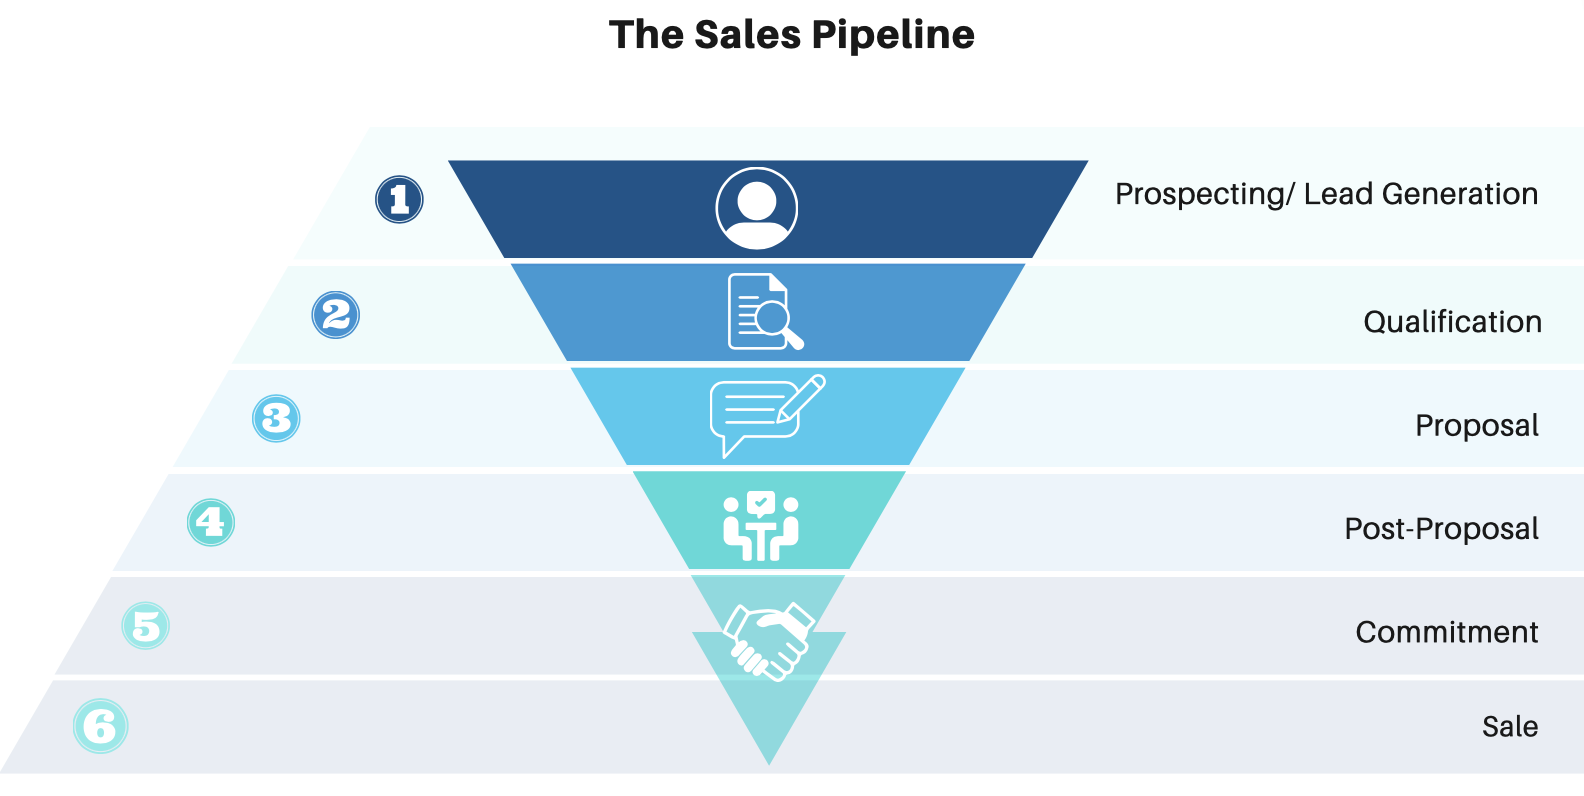 Sales Pipeline image